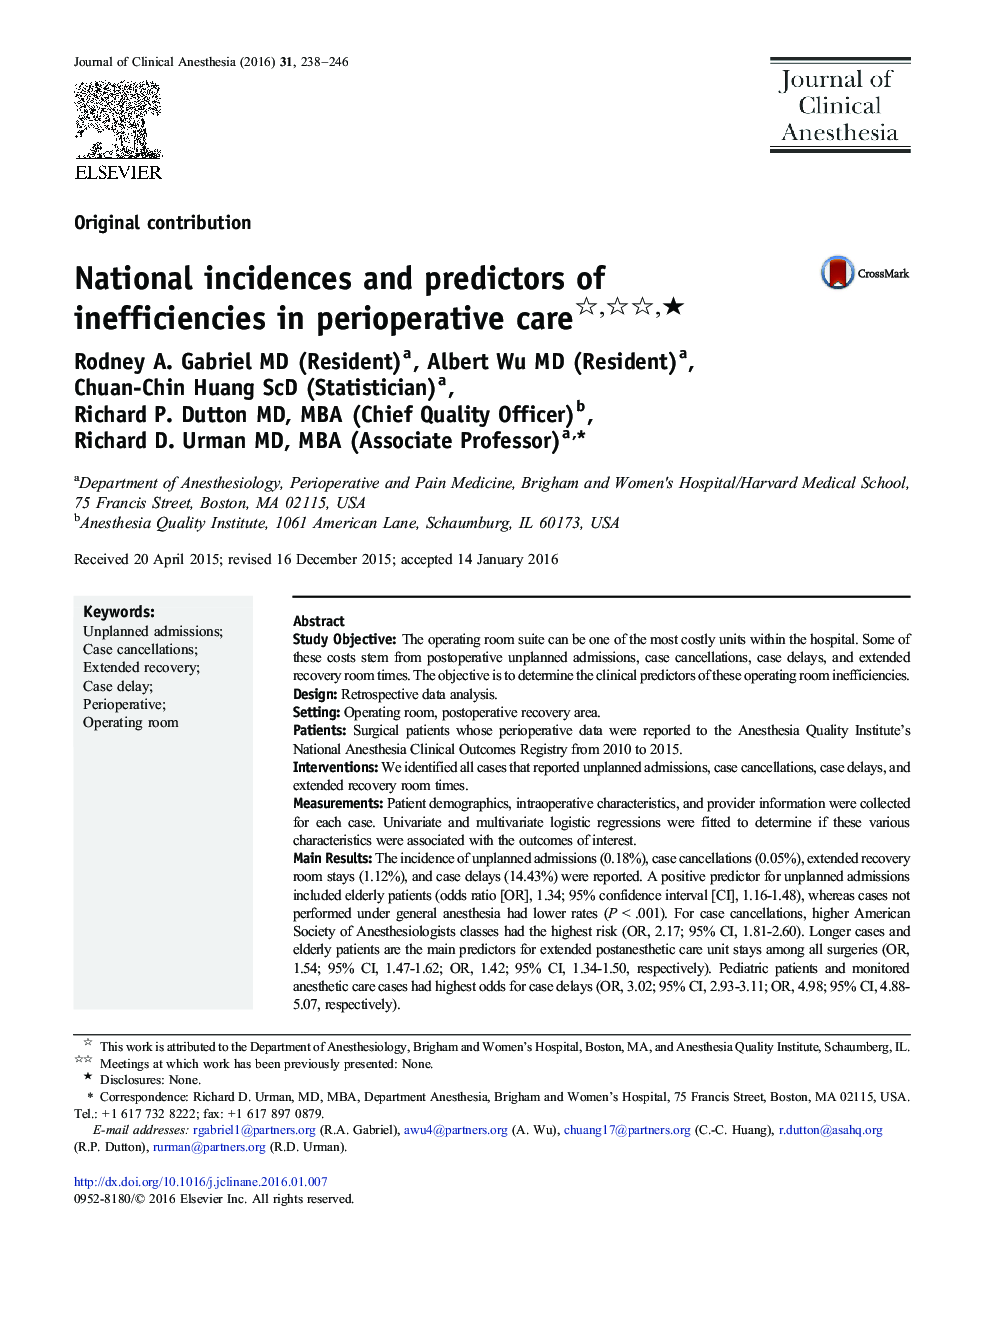 National incidences and predictors of inefficiencies in perioperative care